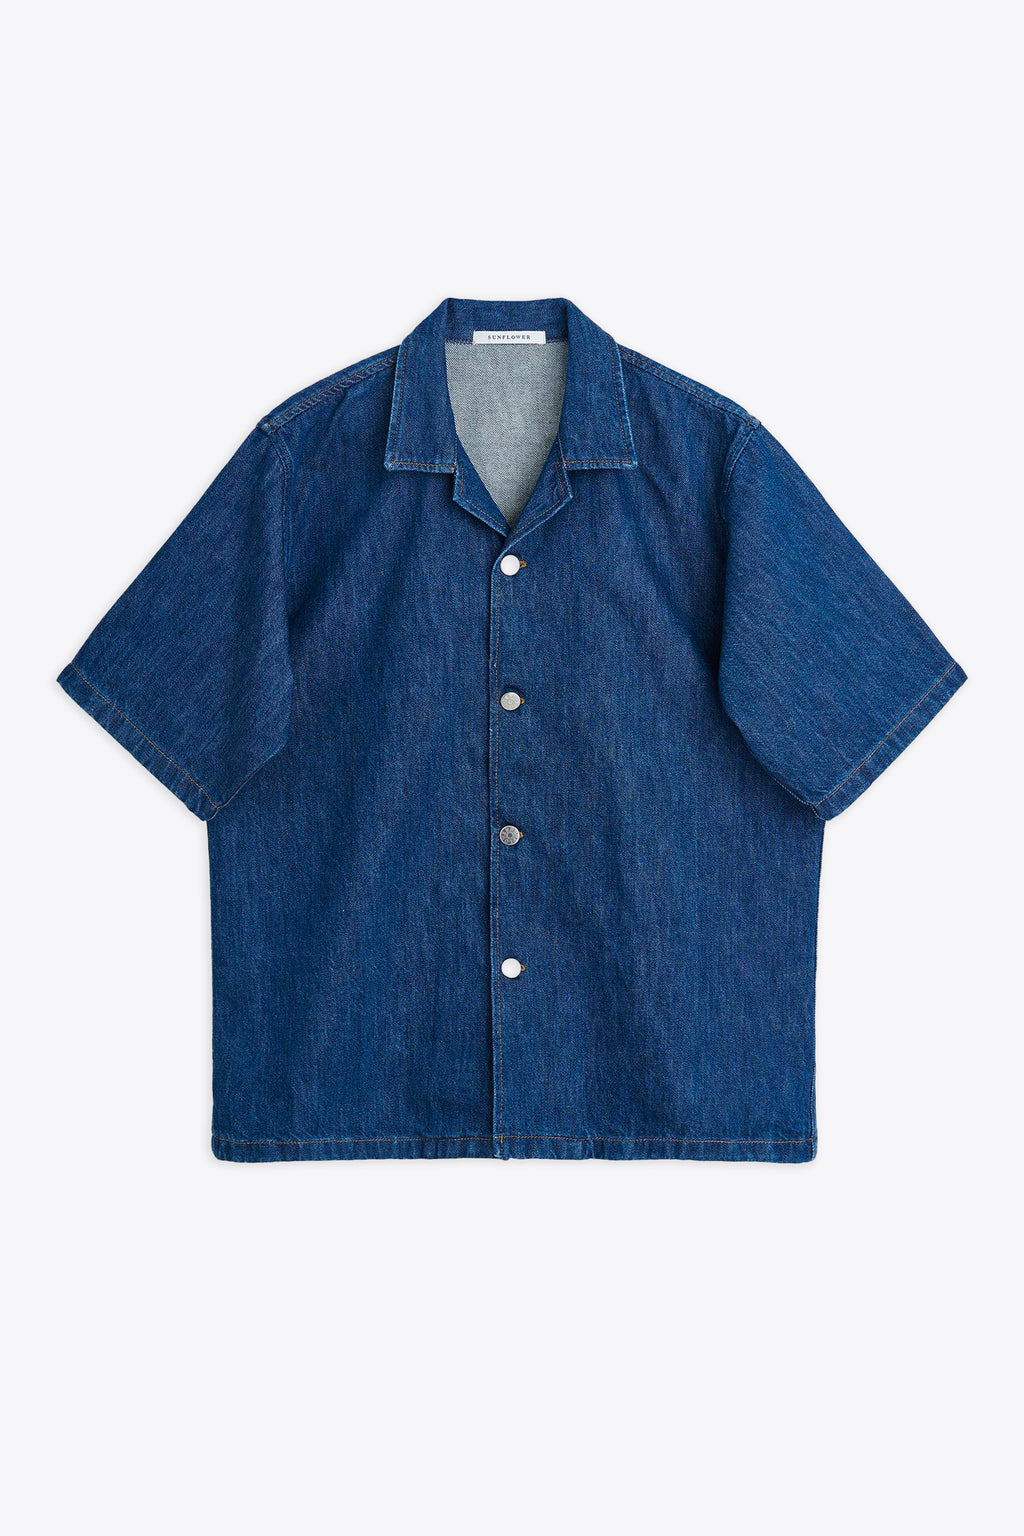 alt-image__Blue-rinse-denim-shirt-with-short-sleeves---Loose-Shirt